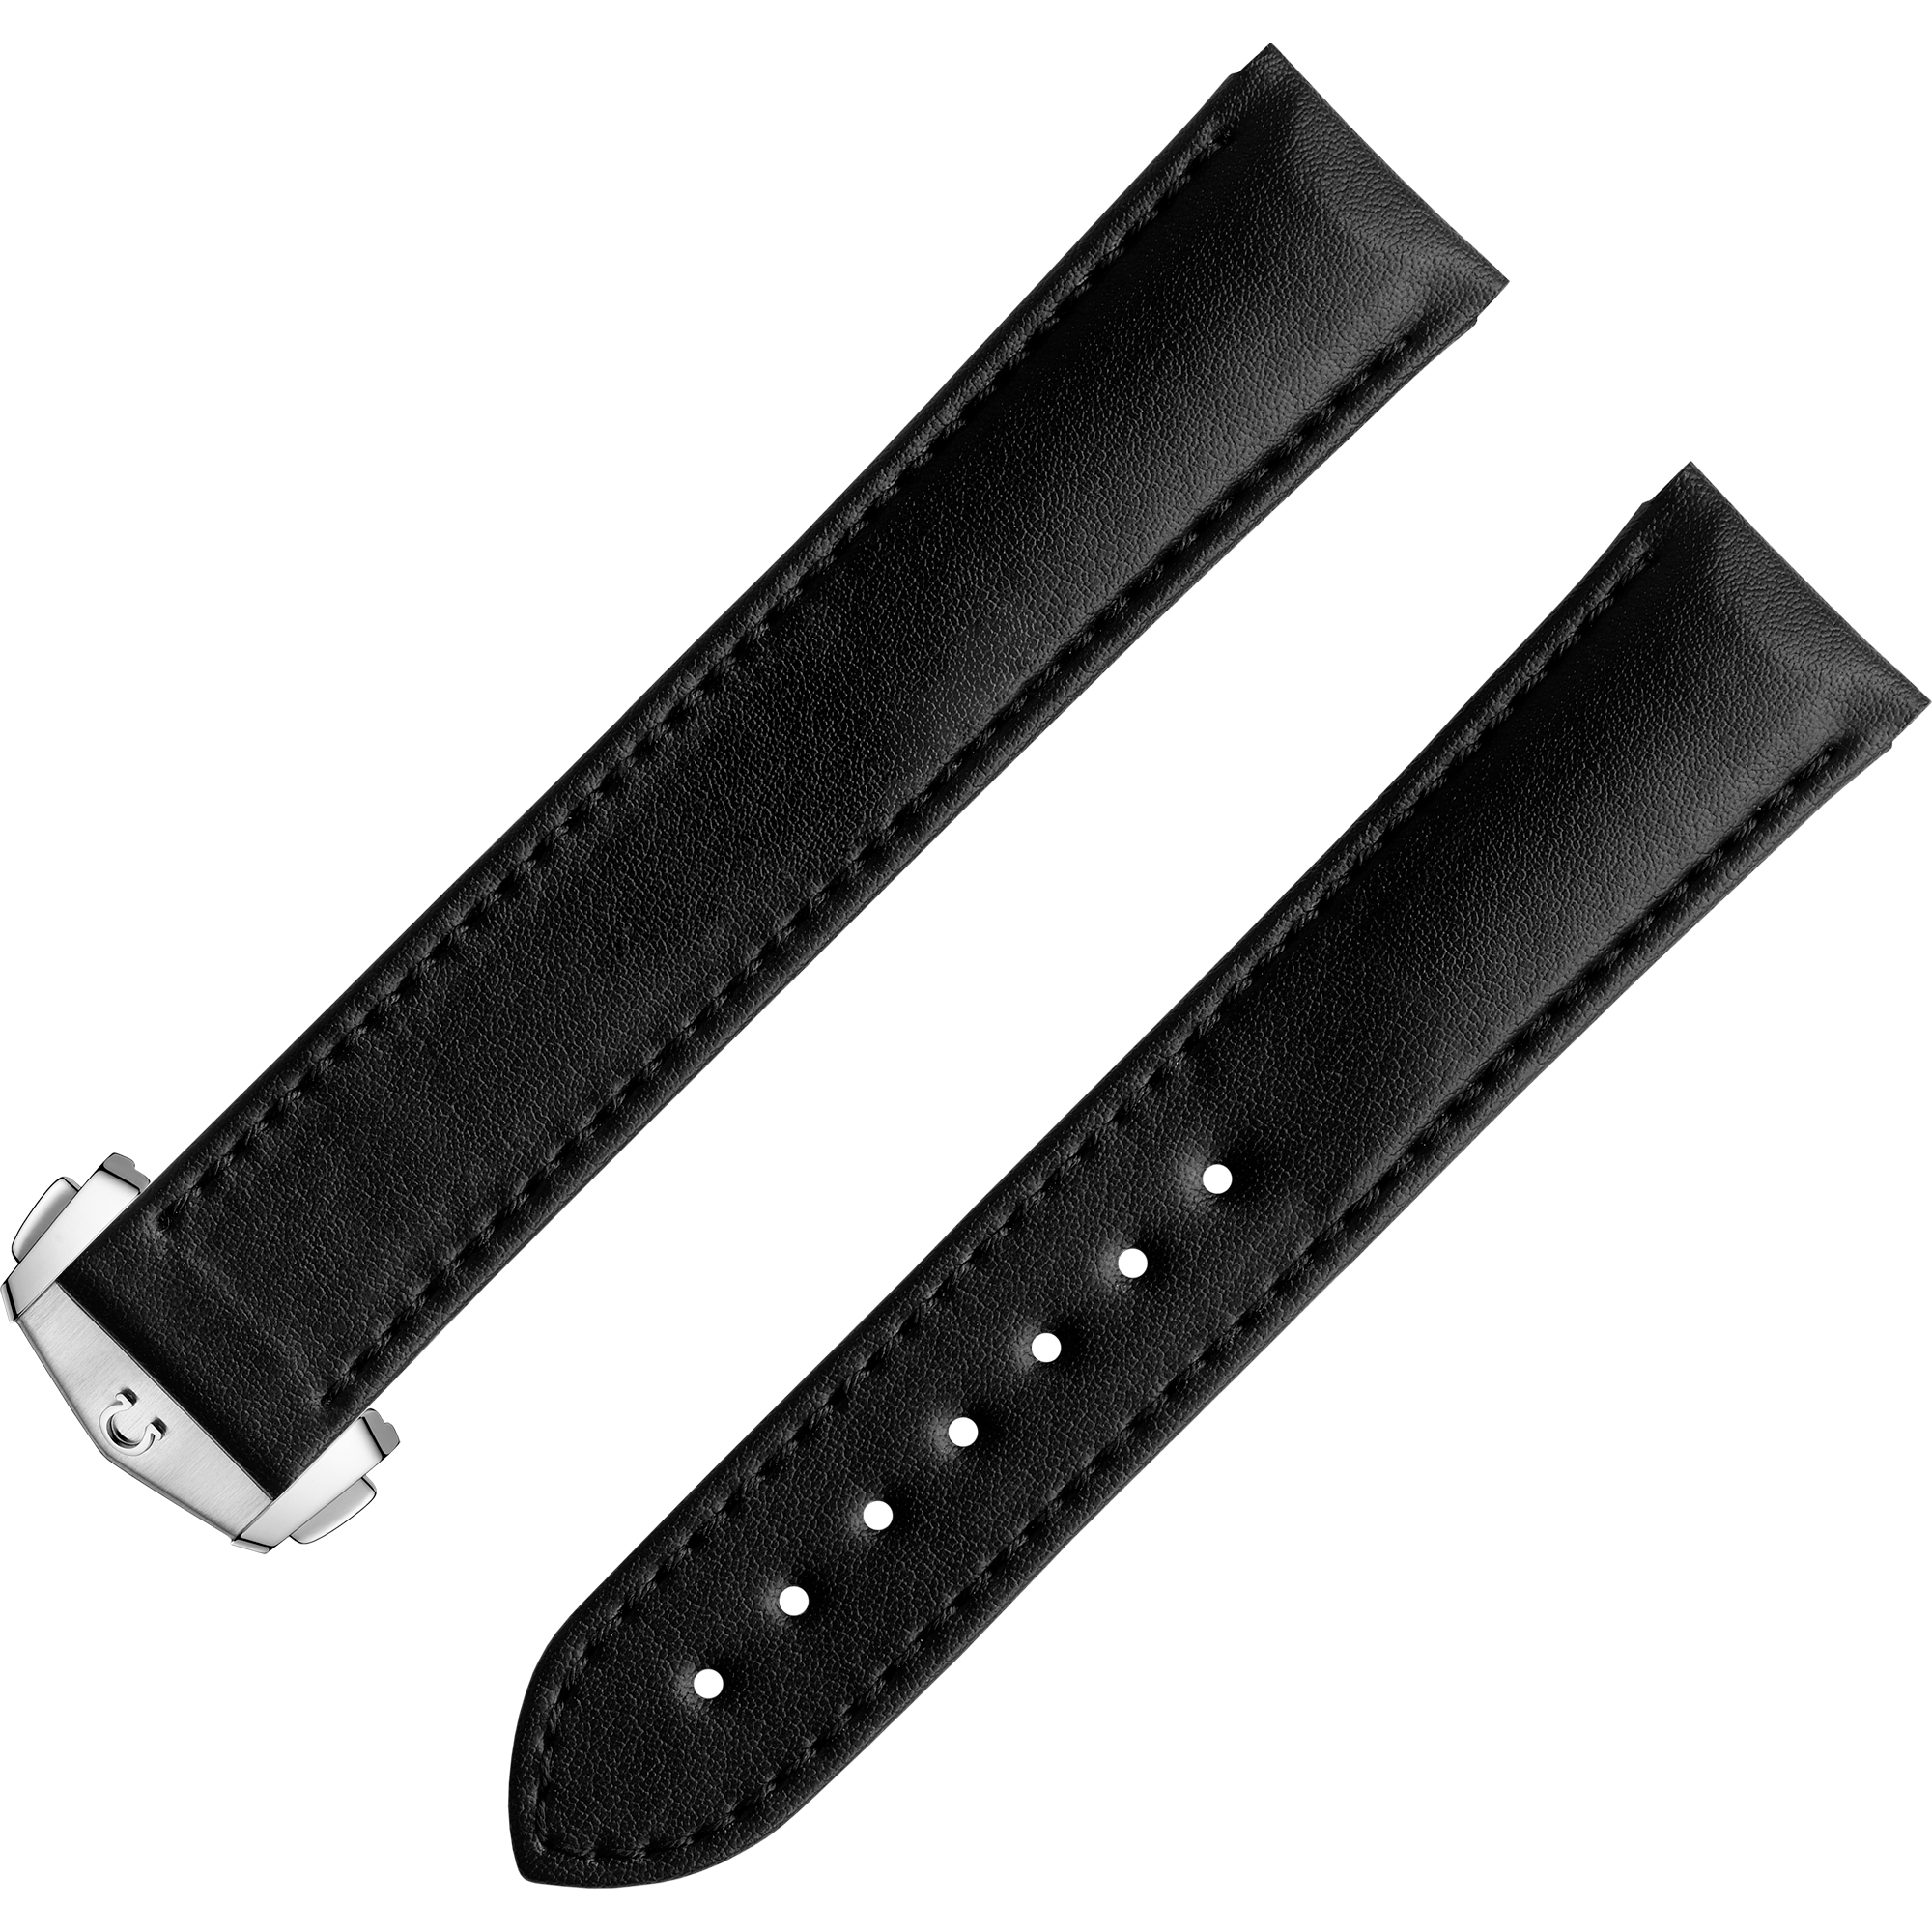 Two-piece strap - Black vegan strap with foldover clasp - 032Z017133